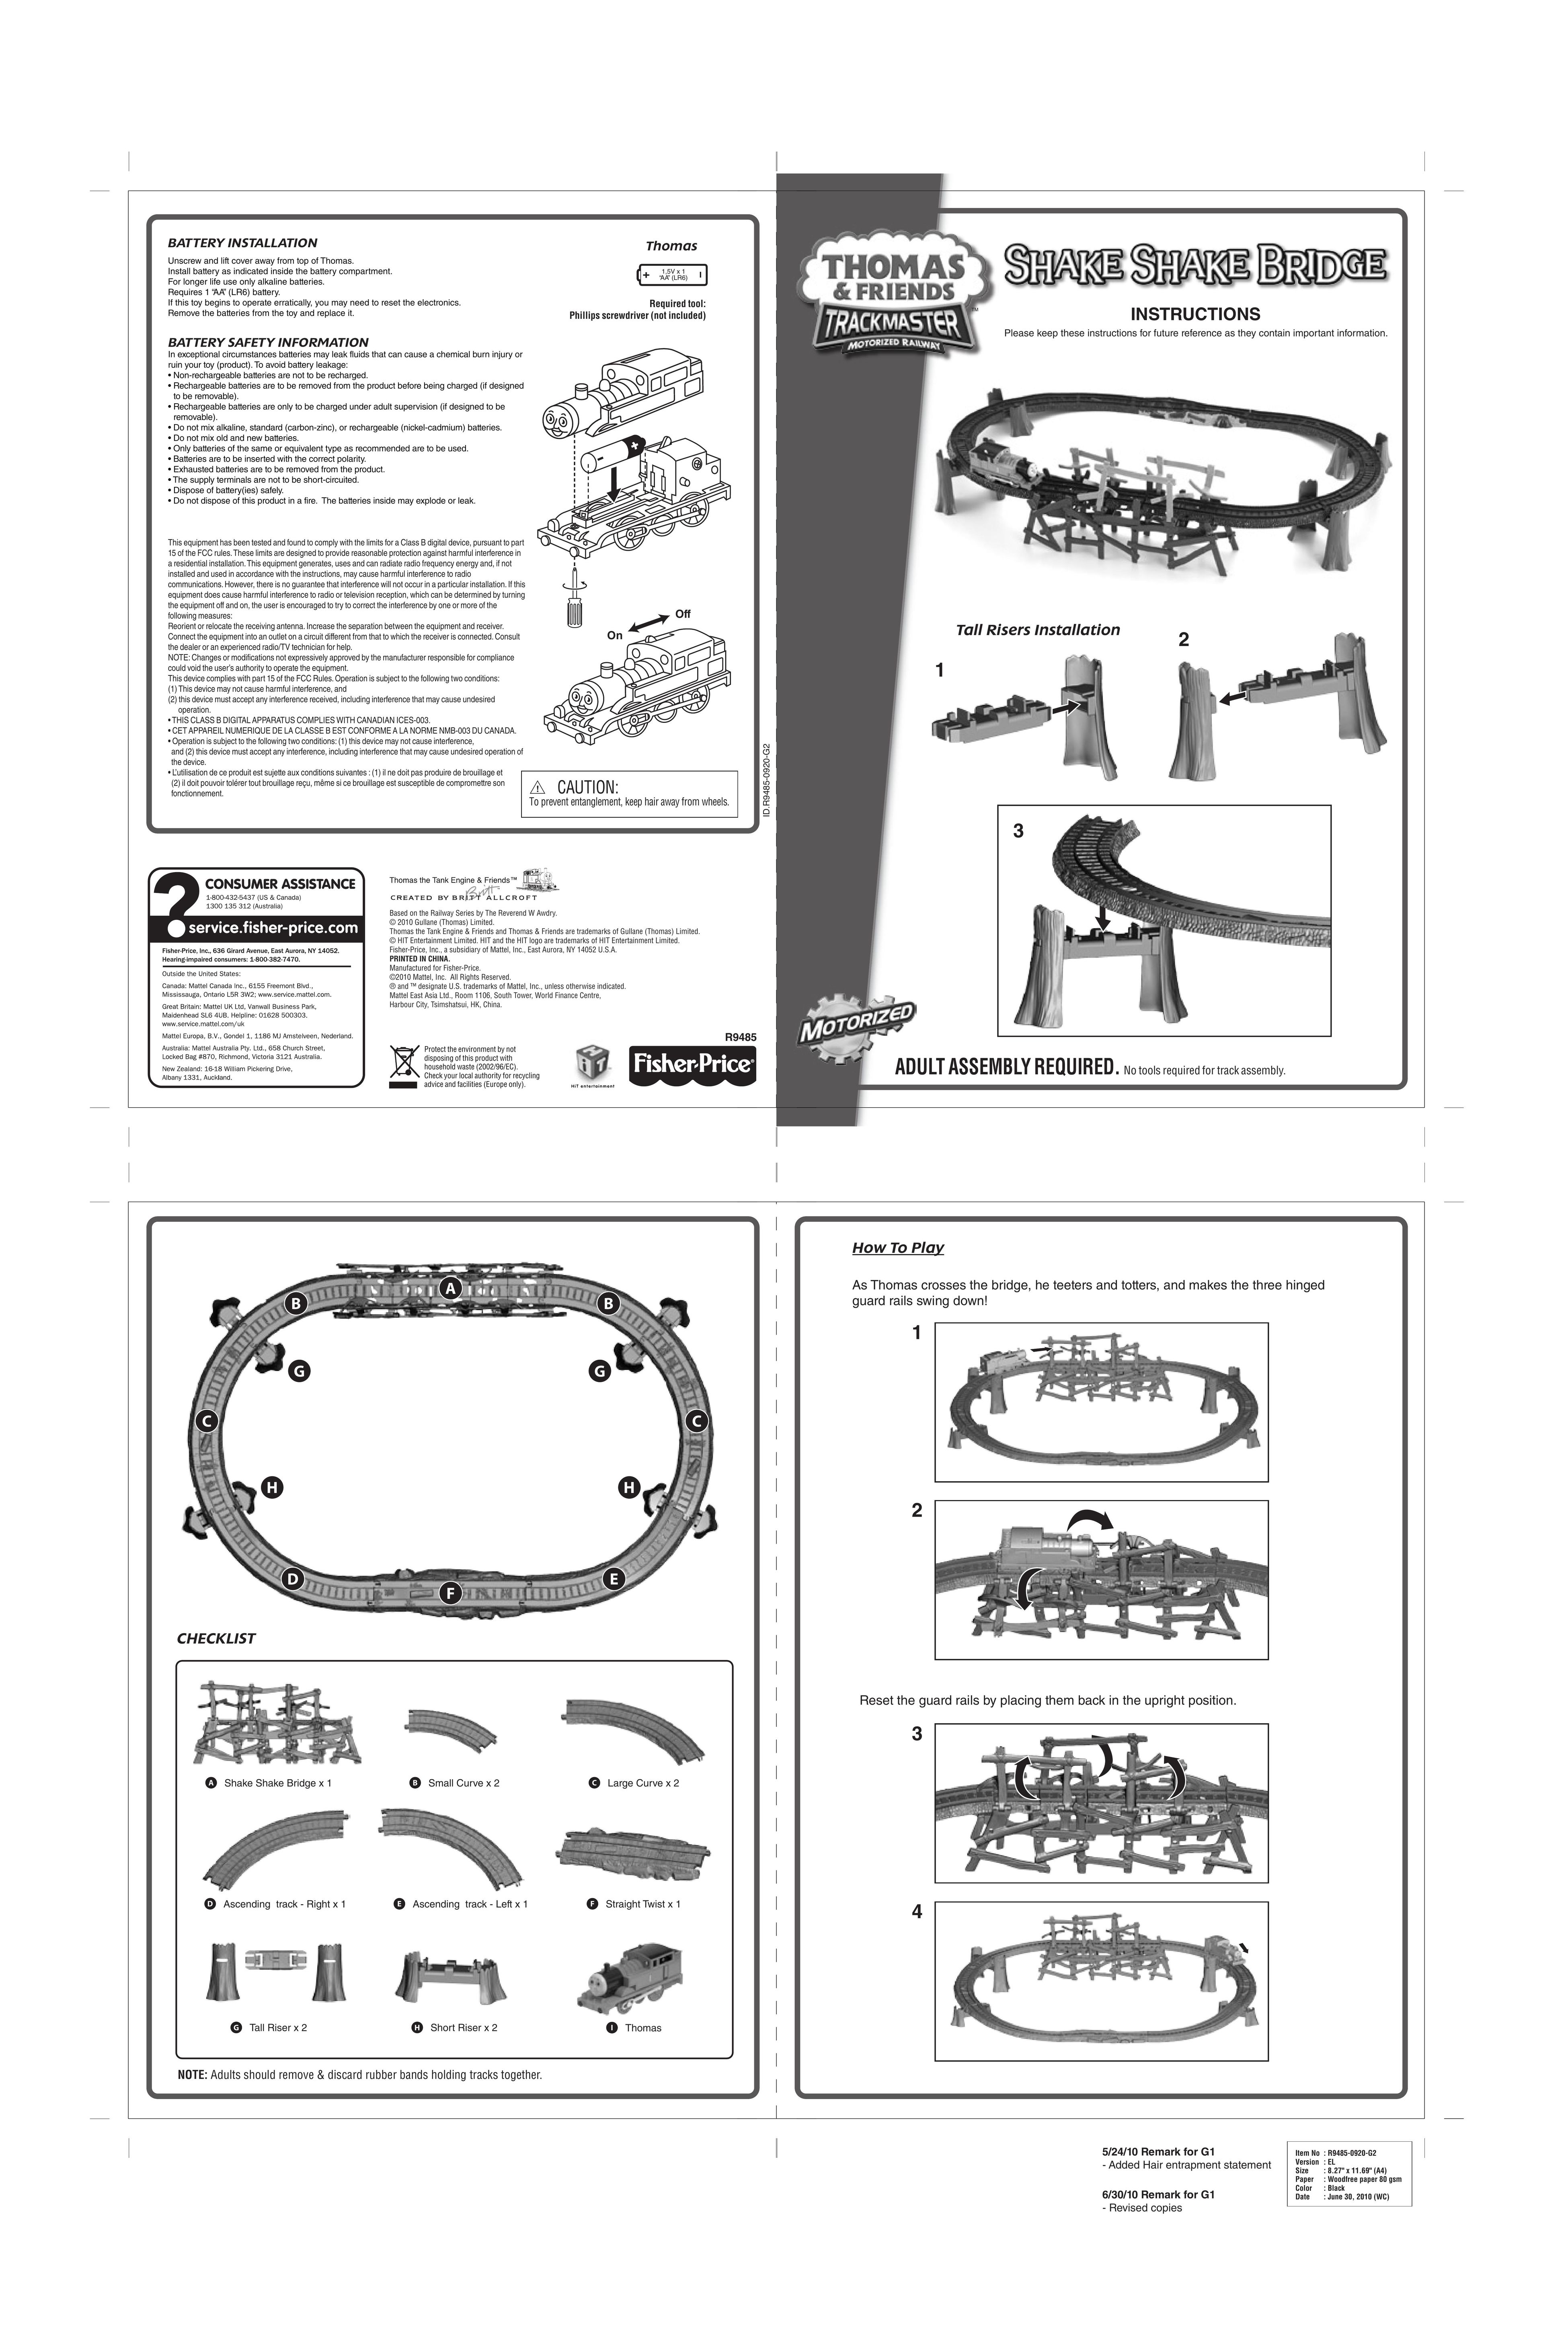 Fisher-Price R9485 Building Set User Manual